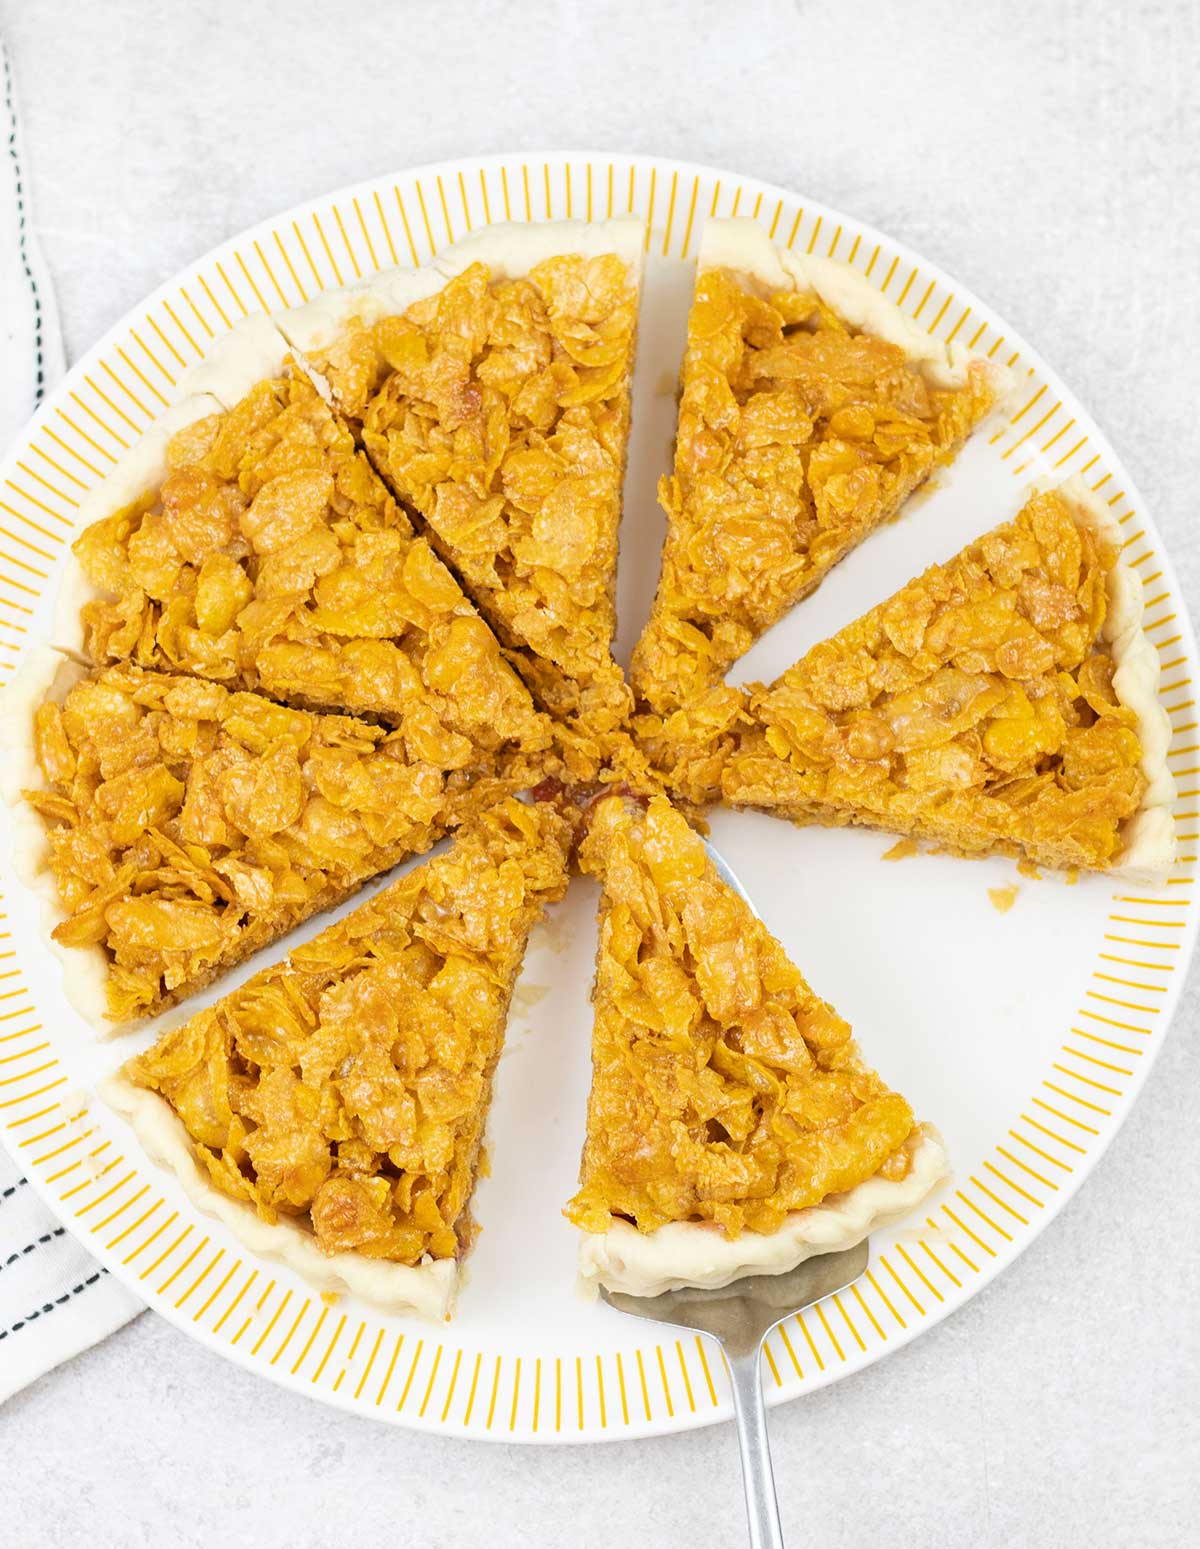 Cut the cornflake tart into slices.